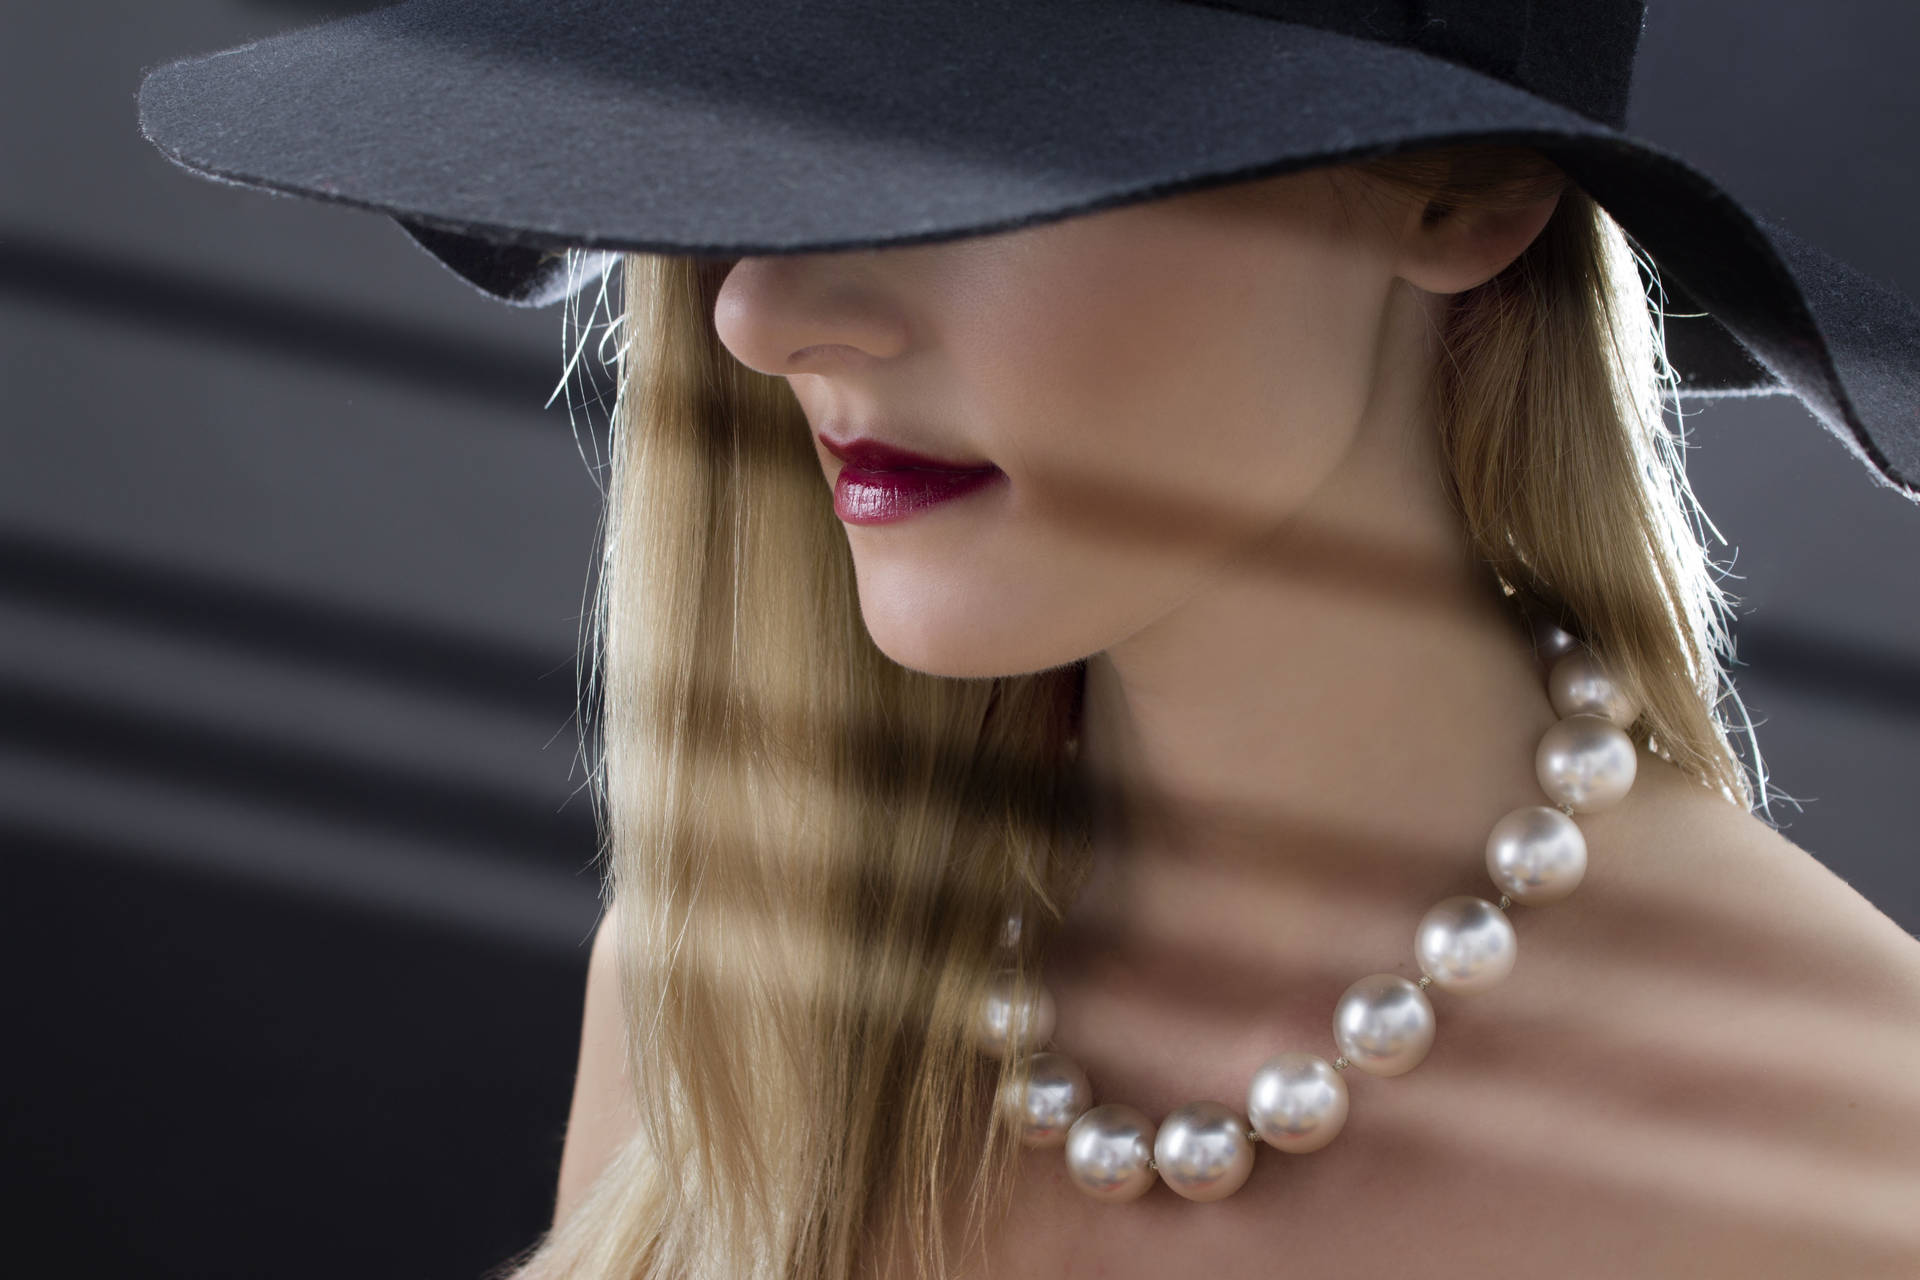 Hat Model In Pearls